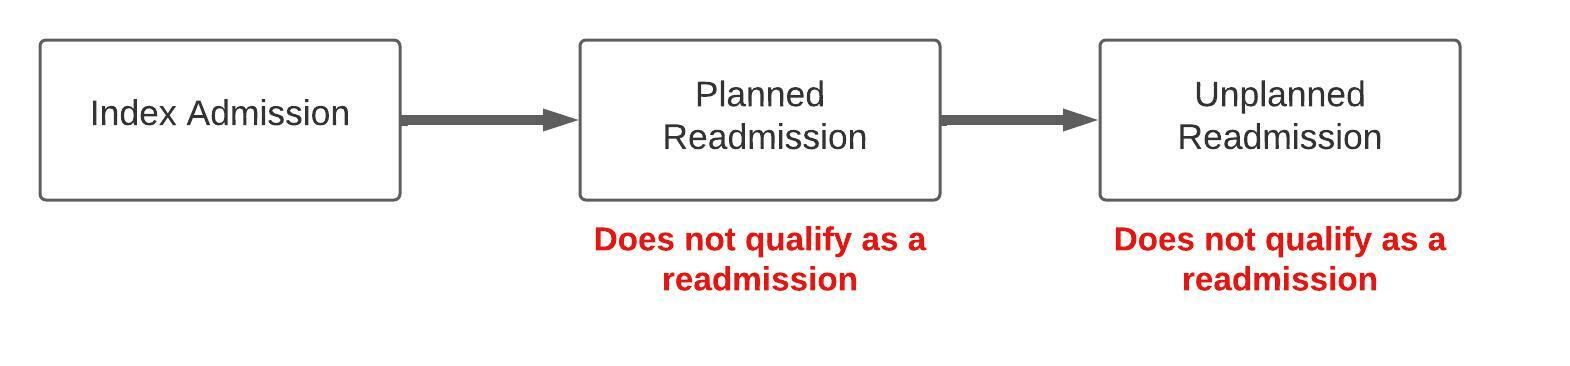 Unplanned Readmission 1